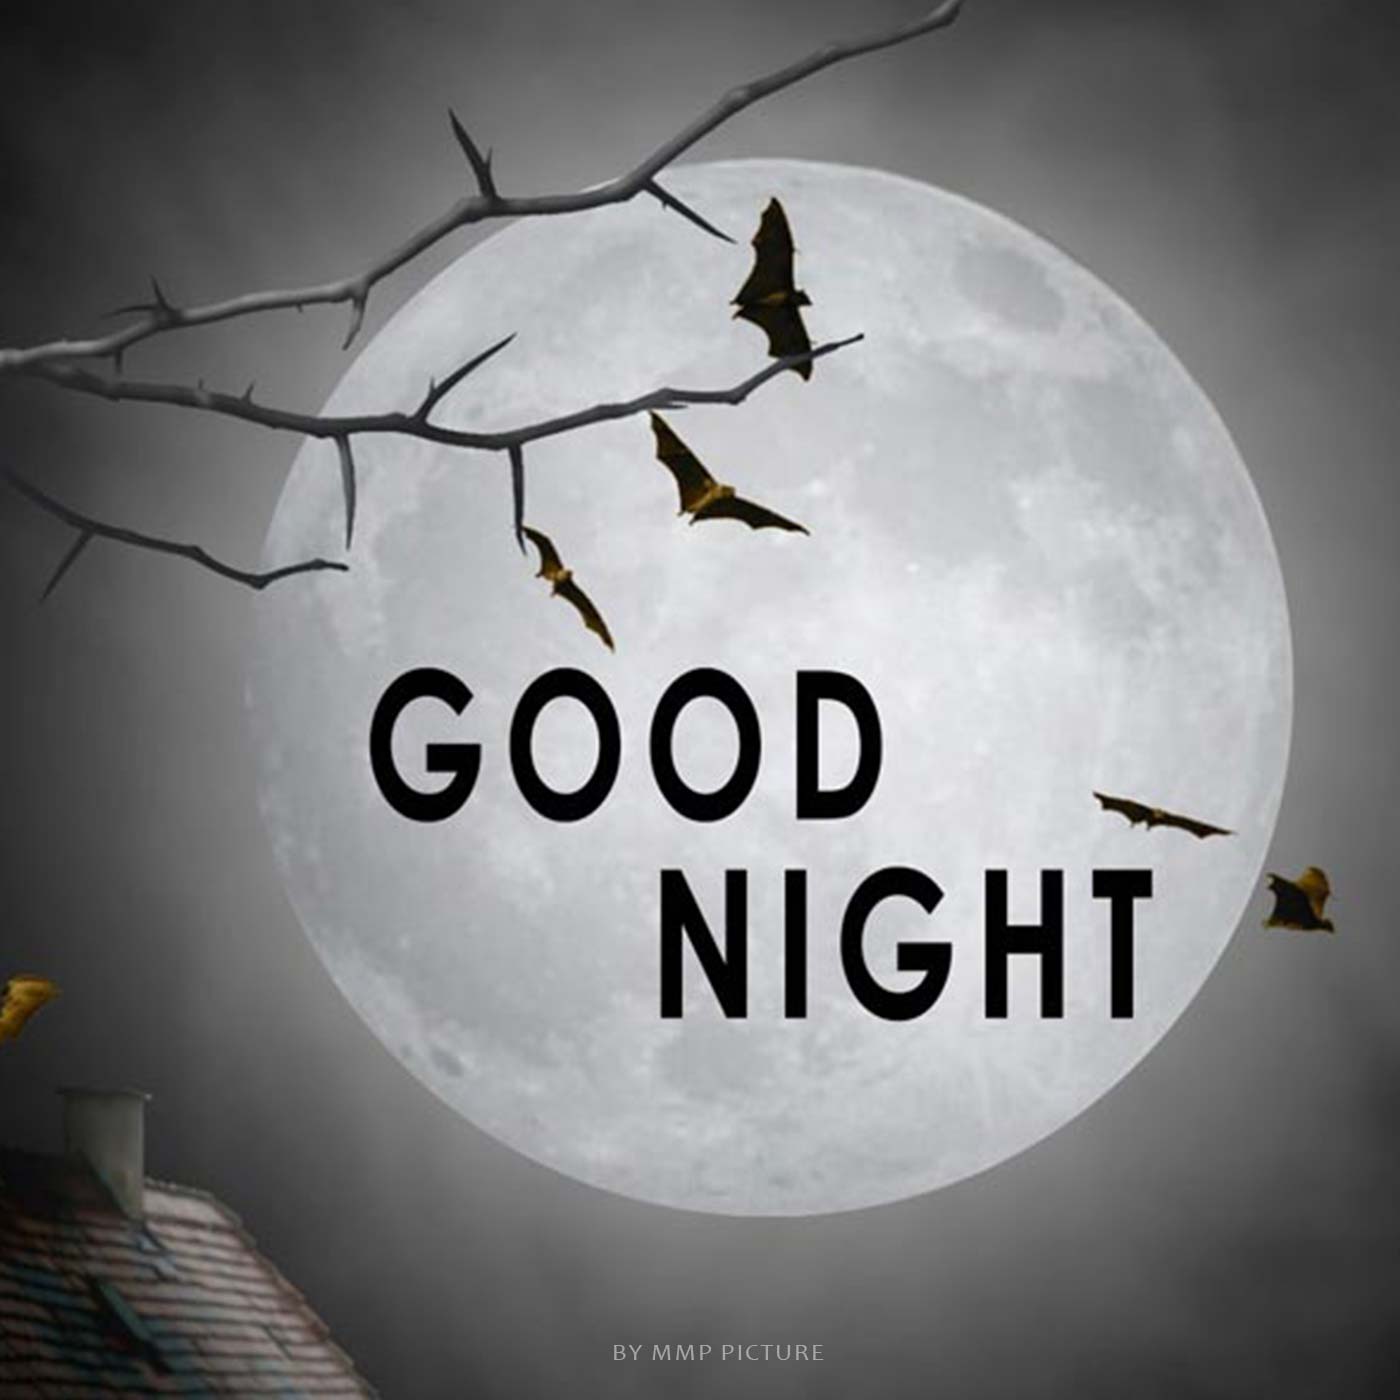 Big Moon And Bats Good Night Image For WhatsApp